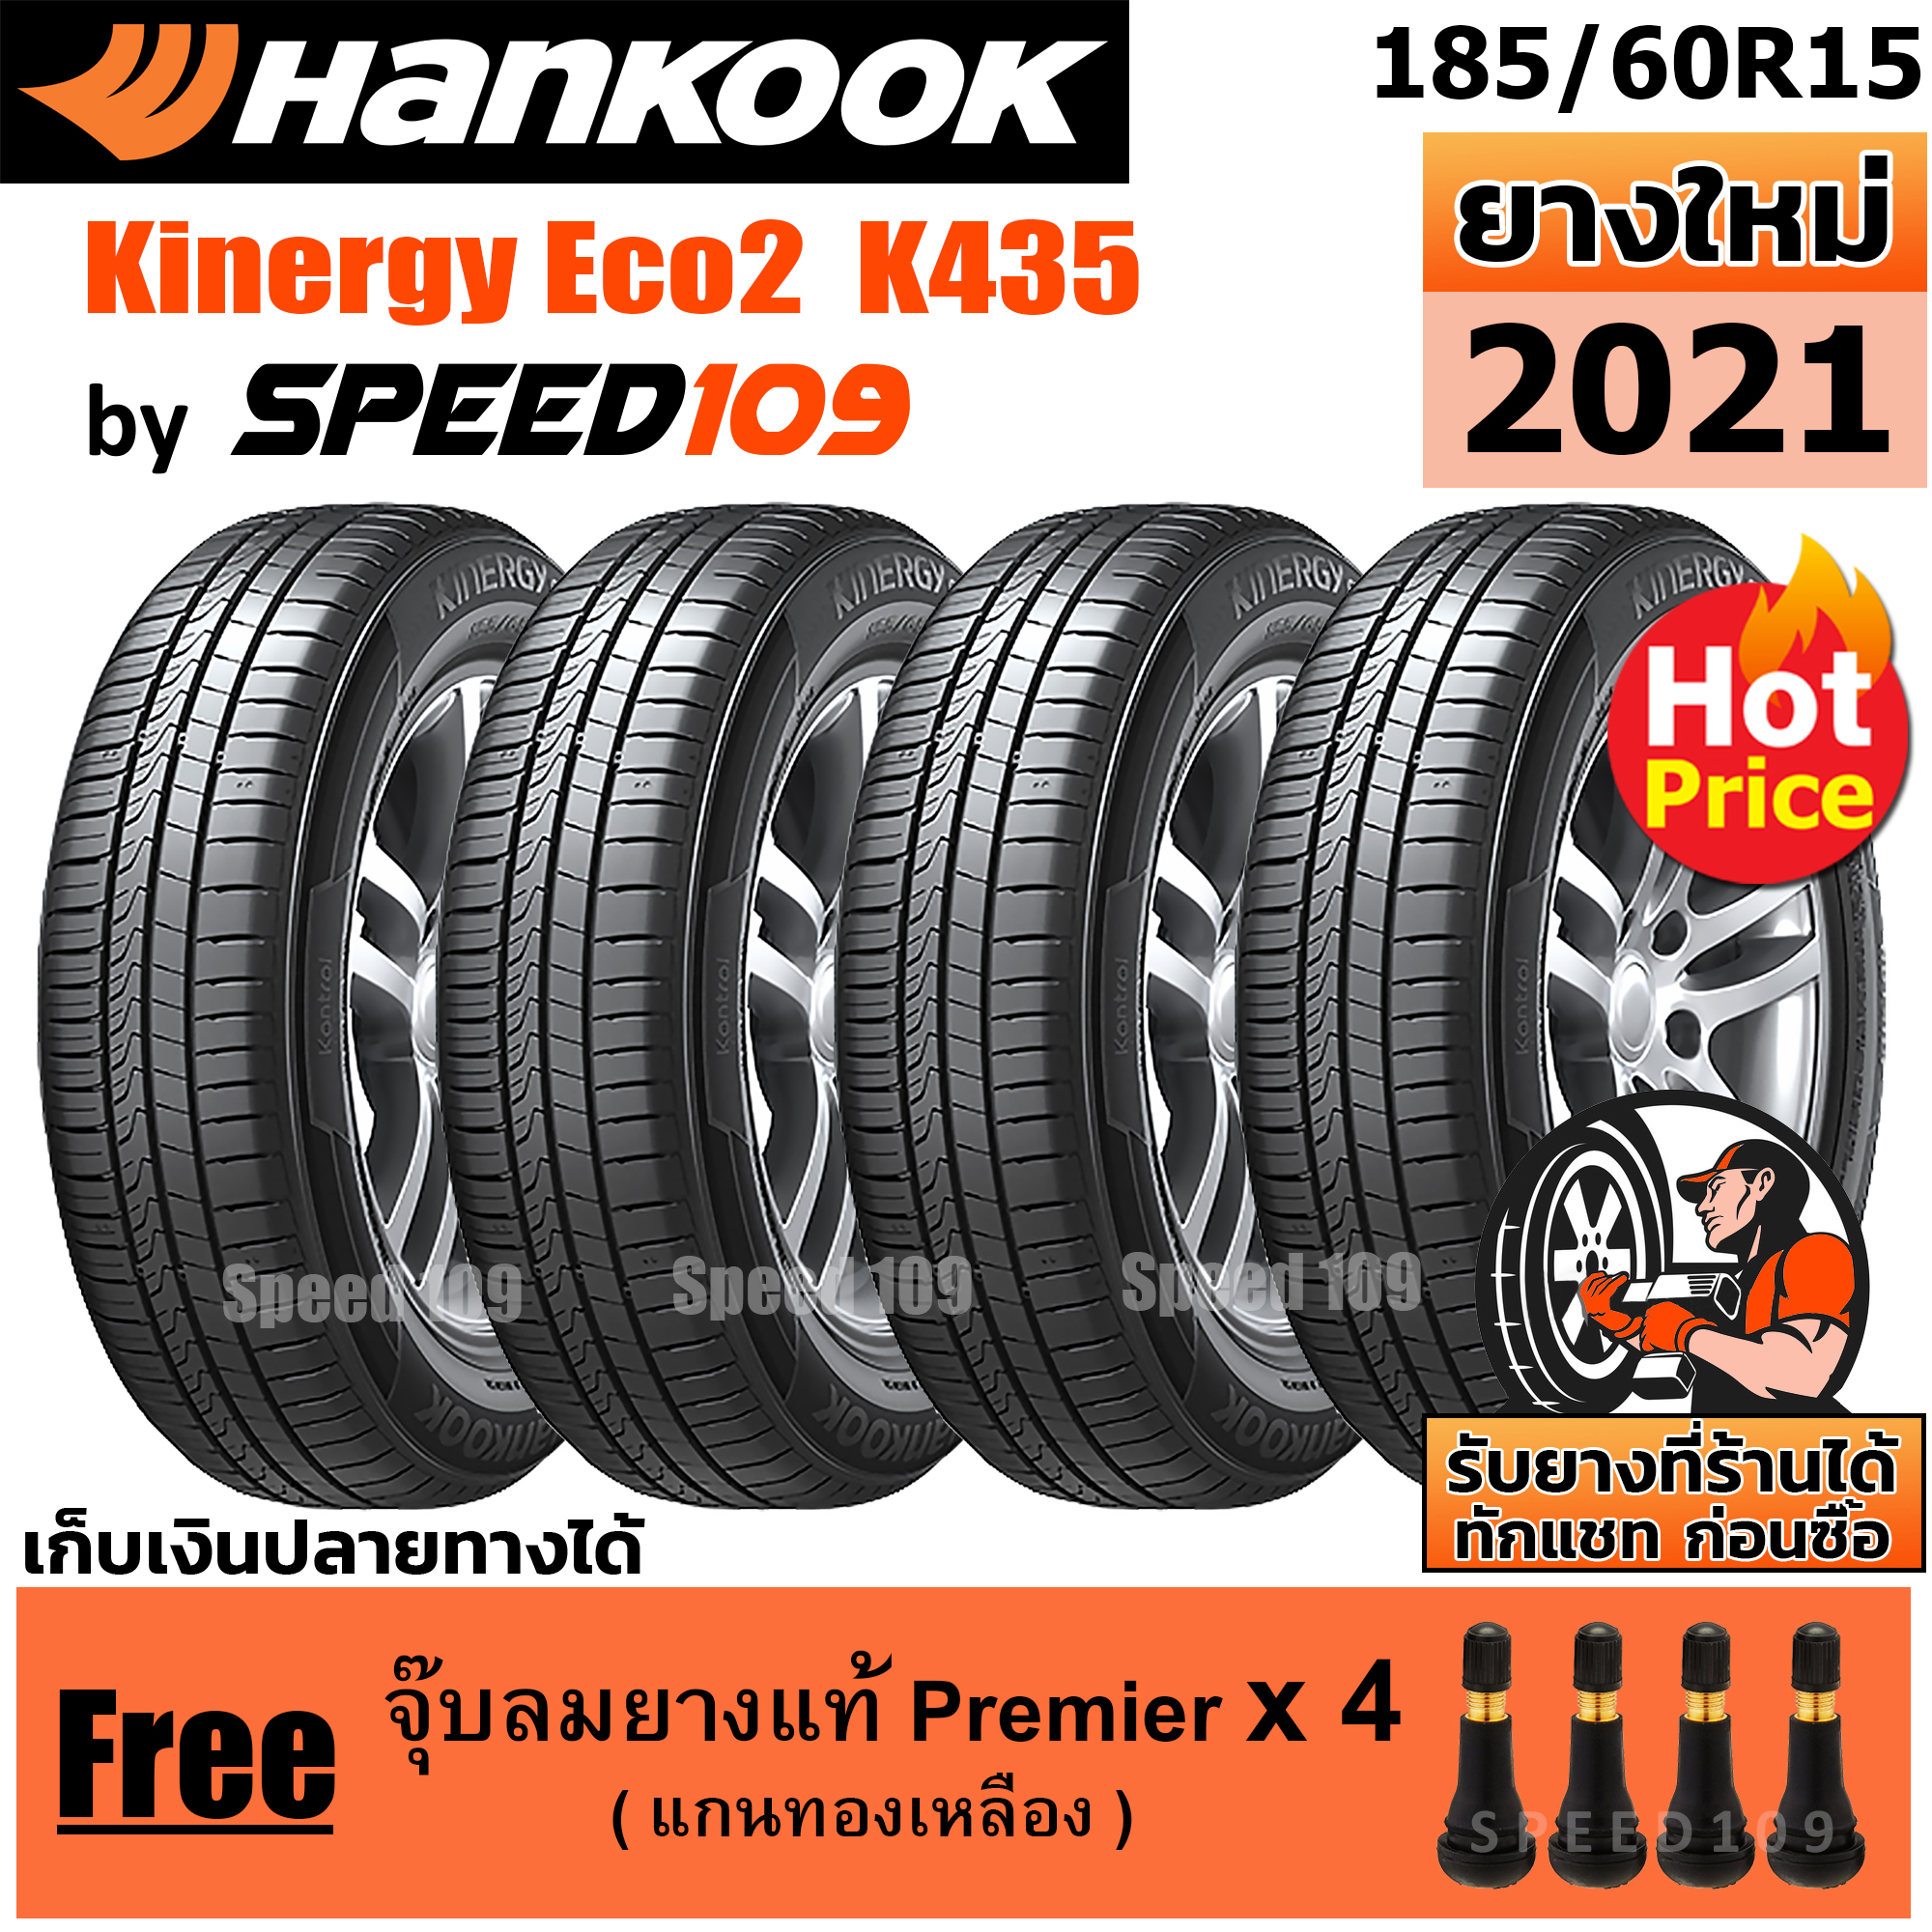 HANKOOK ยางรถยนต์ ขอบ 15 ขนาด 185/60R15 รุ่น Kinergy Eco2 K435 - 4 เส้น (ปี 2021)